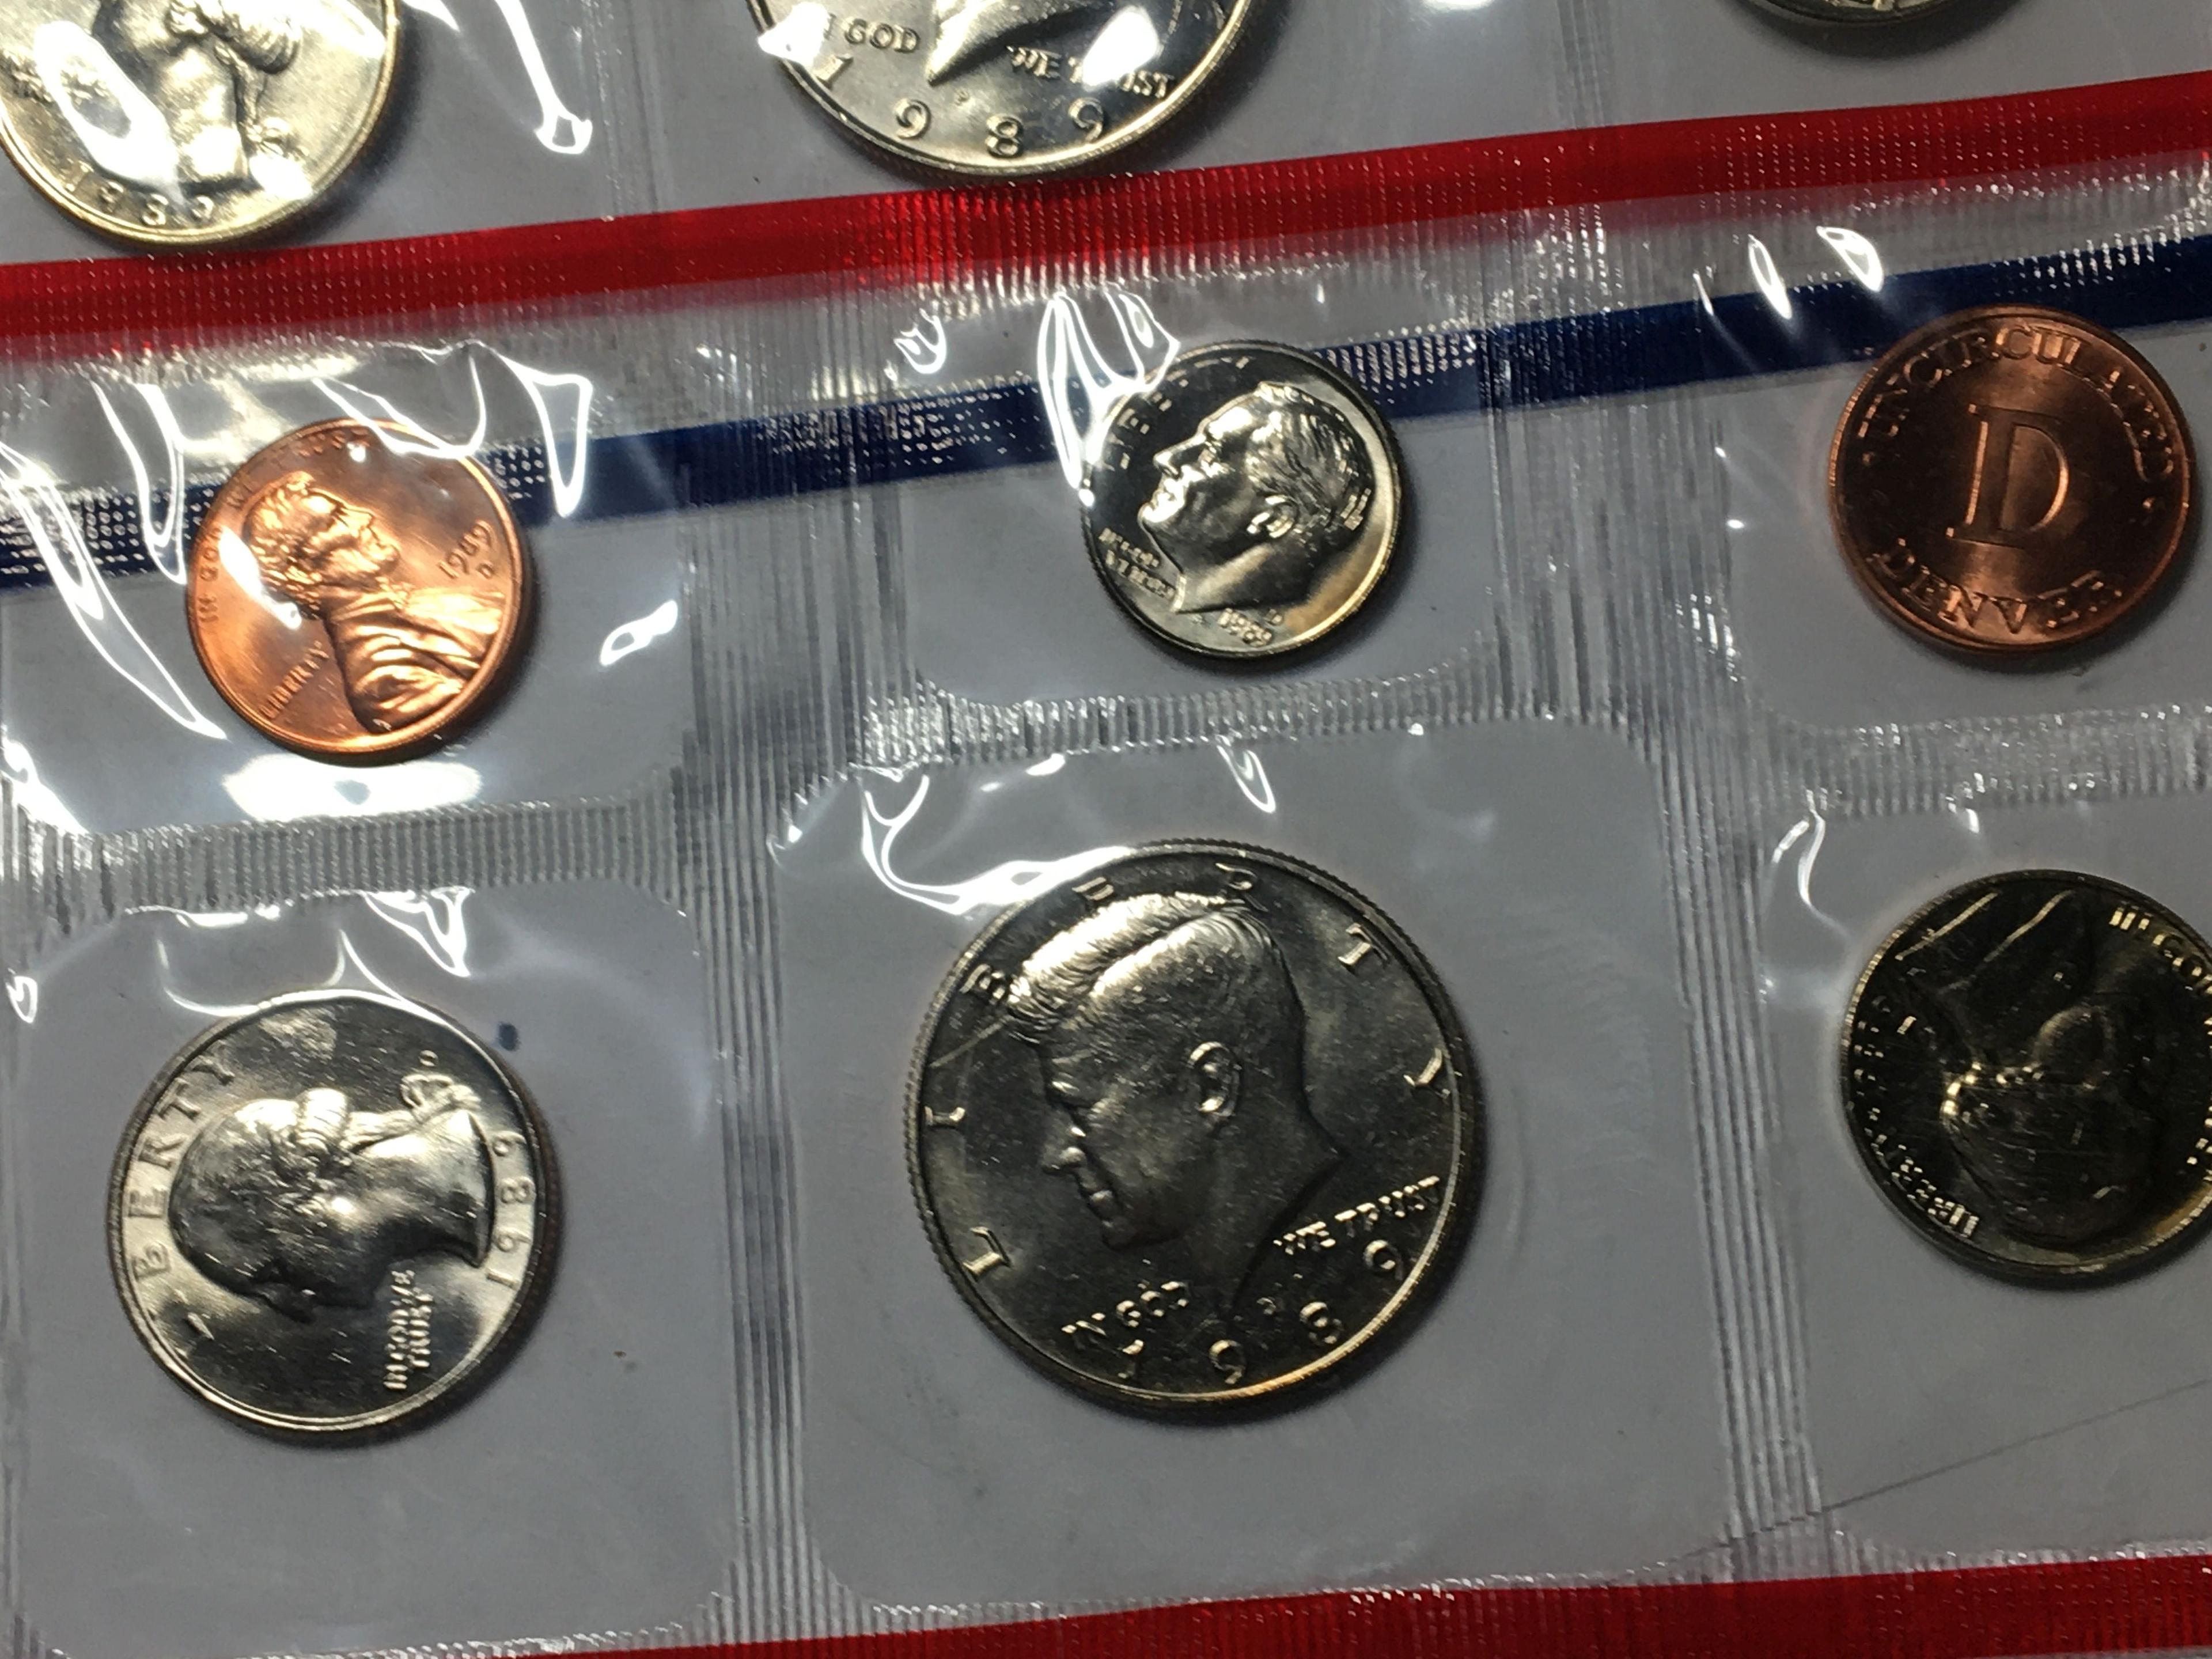 U S A Mint Set 1989 10 Coins P And D 